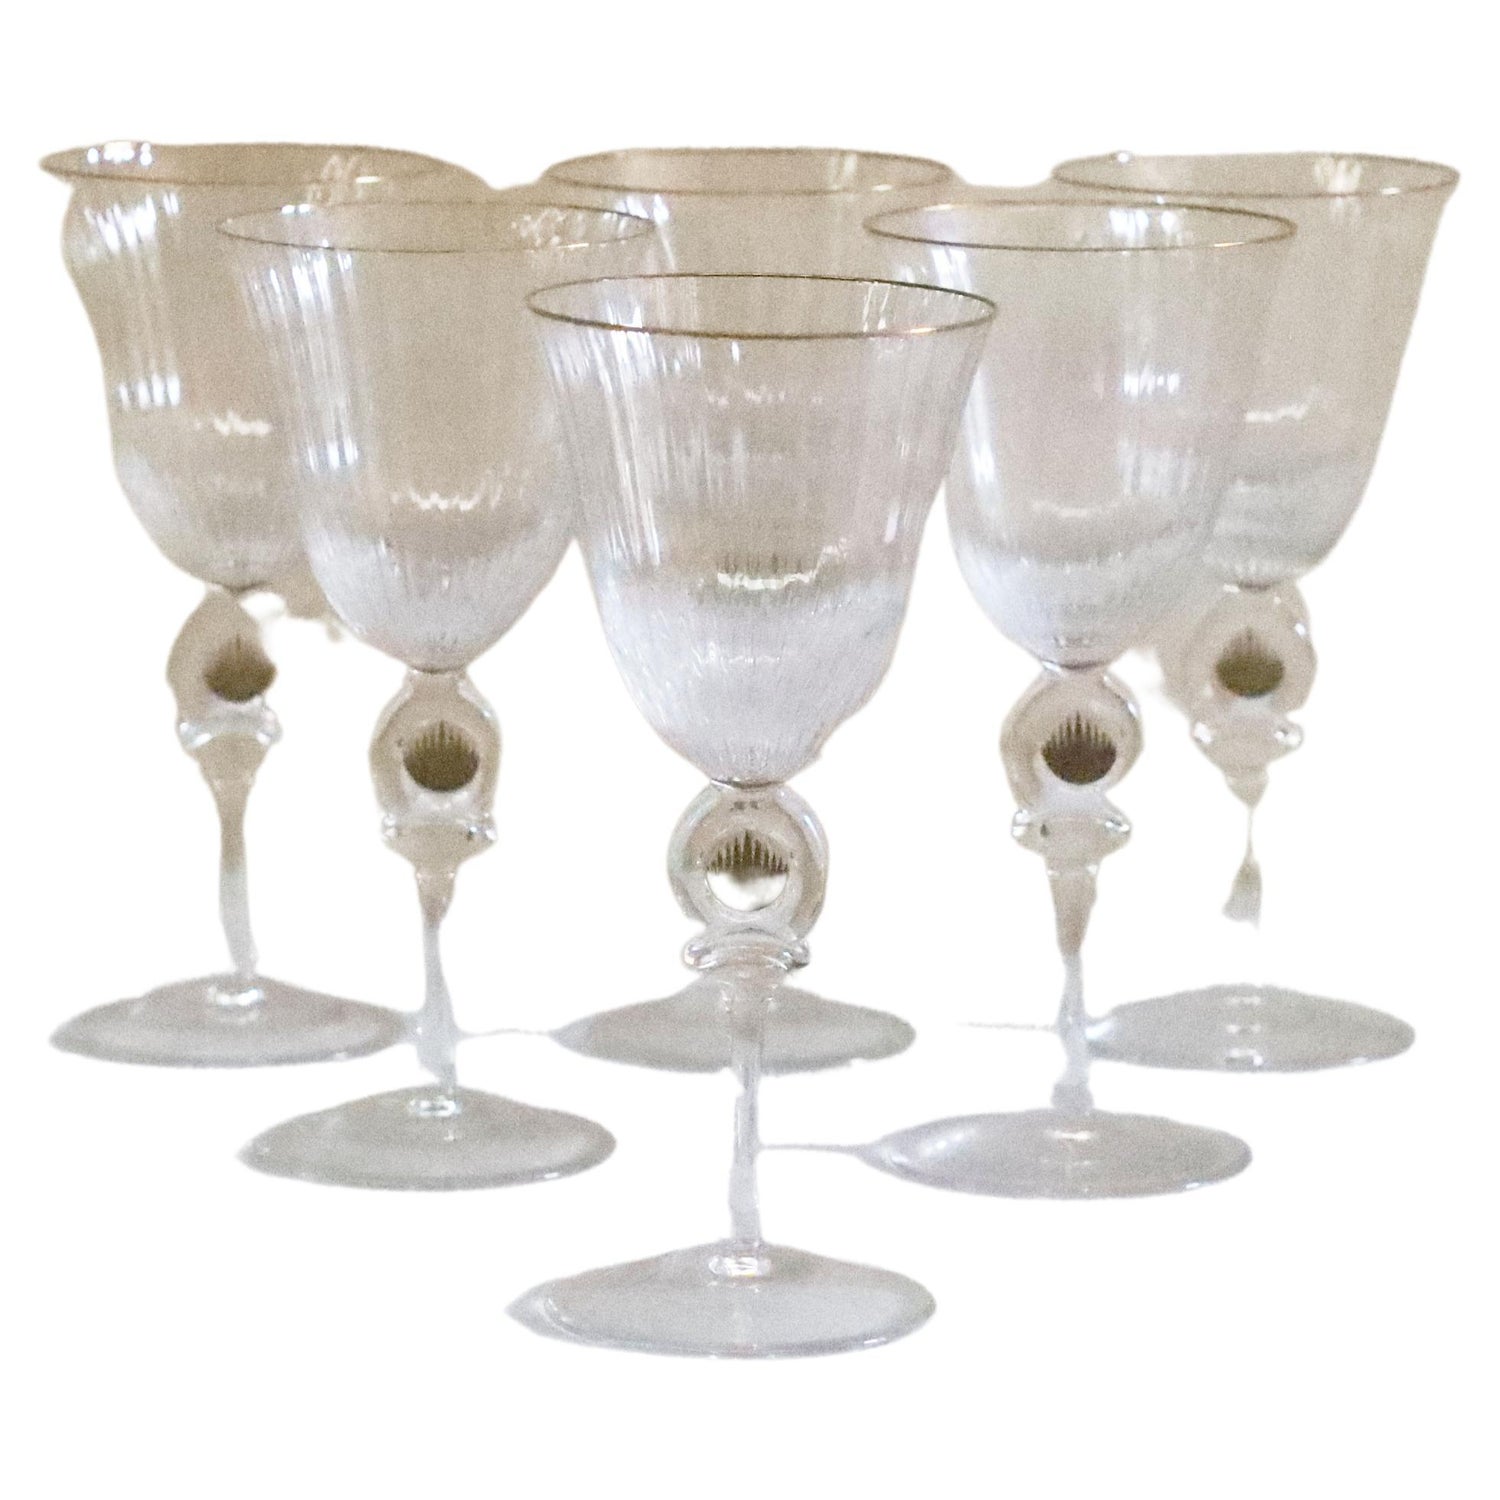 https://a.1stdibscdn.com/daum-set-of-6-crystal-wine-glasses-with-gold-edges-for-sale/f_73182/f_306114521664381585226/f_30611452_1664381585882_bg_processed.jpg?width=1500